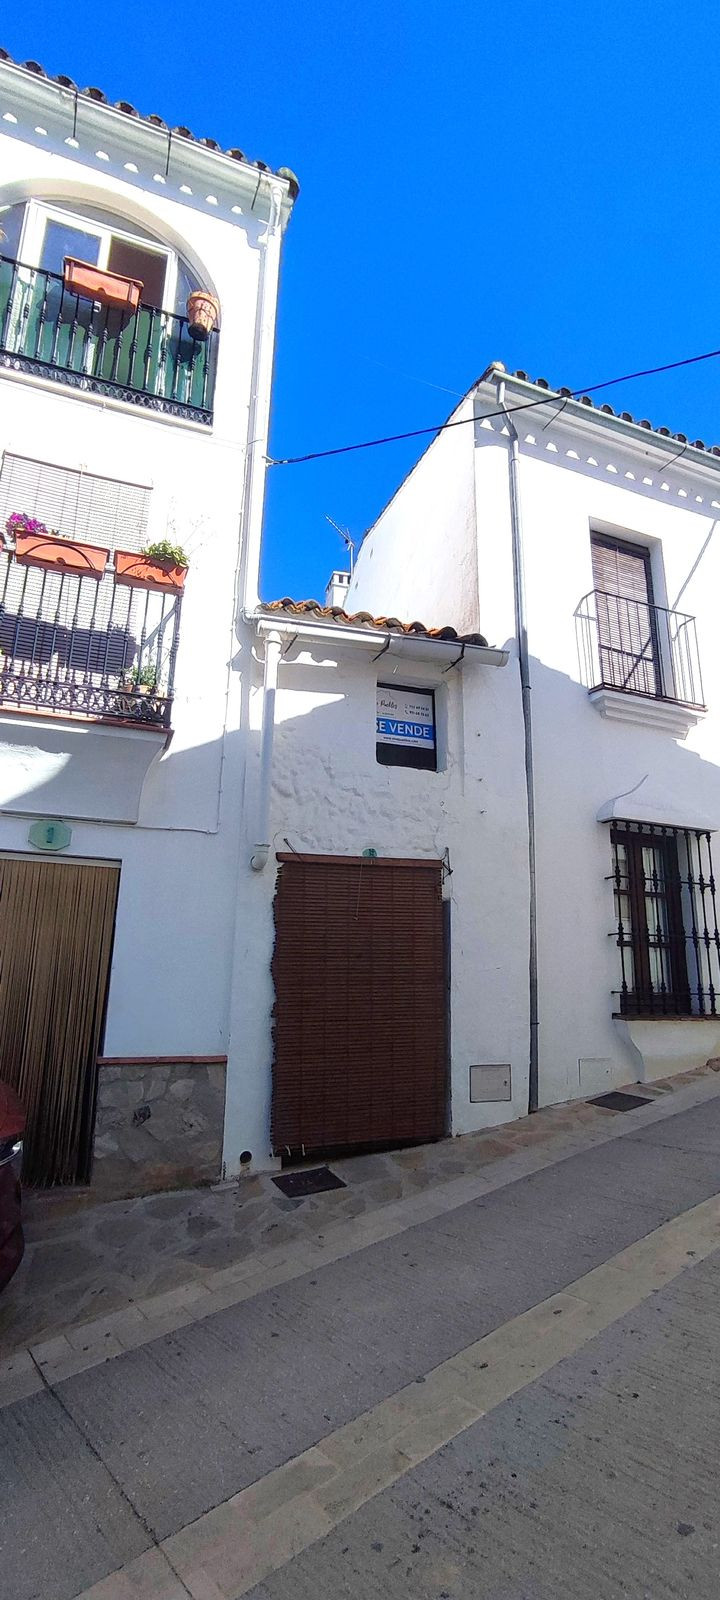 						Townhouse  Terraced
													for sale 
																			 in Gaucín
					